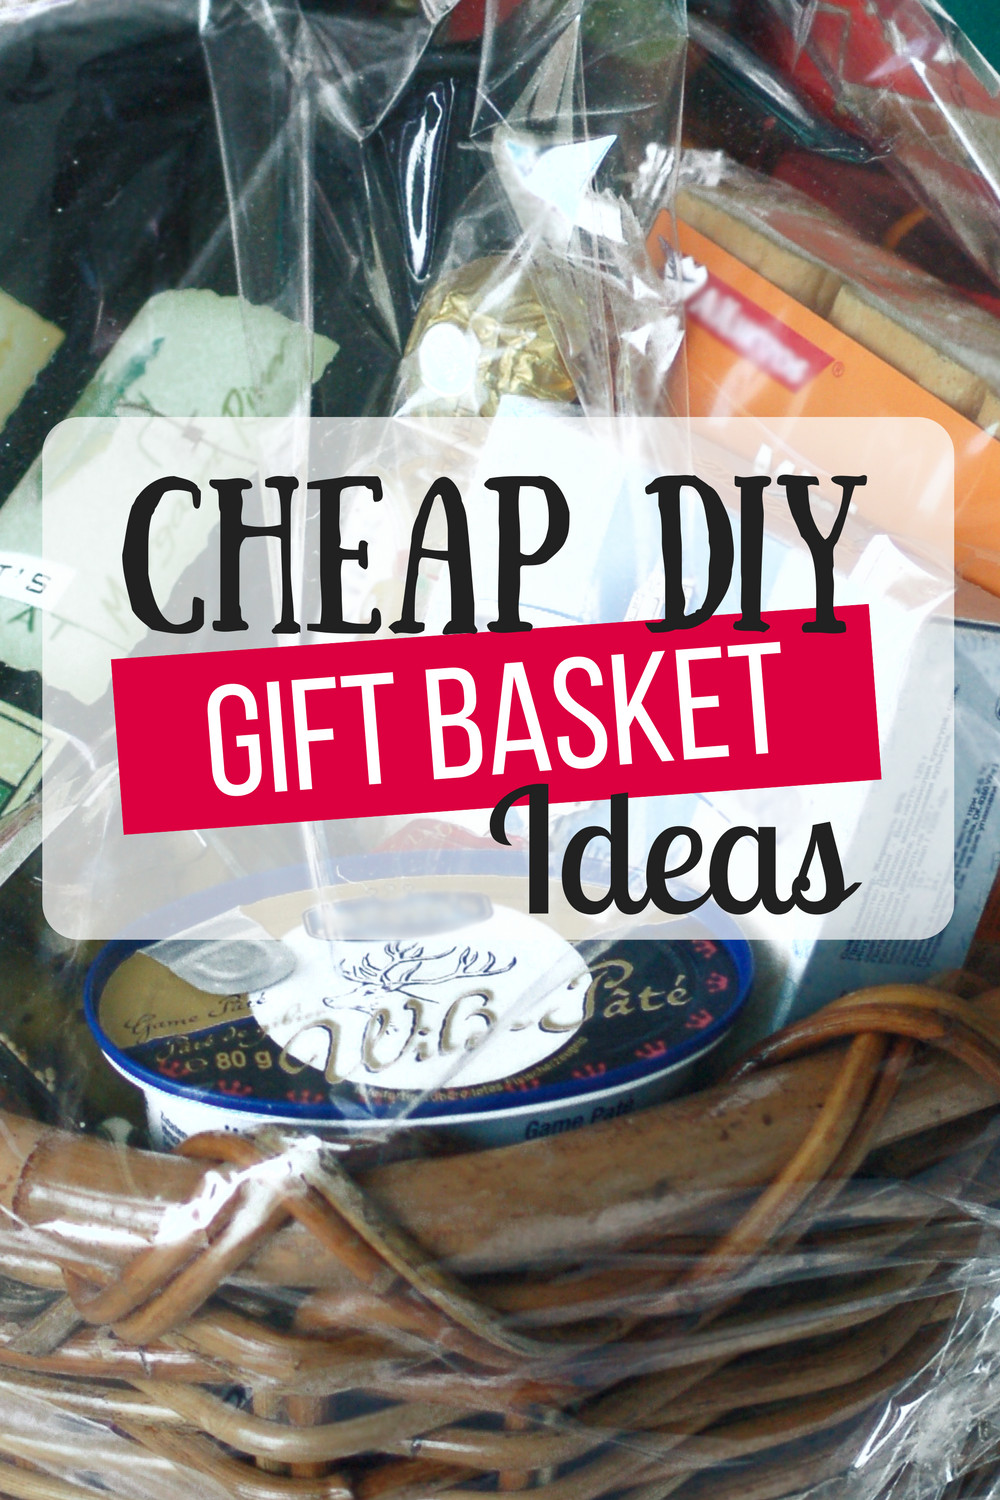 Diy Gift Baskets Ideas
 Cheap DIY Gift Baskets The Busy Bud er